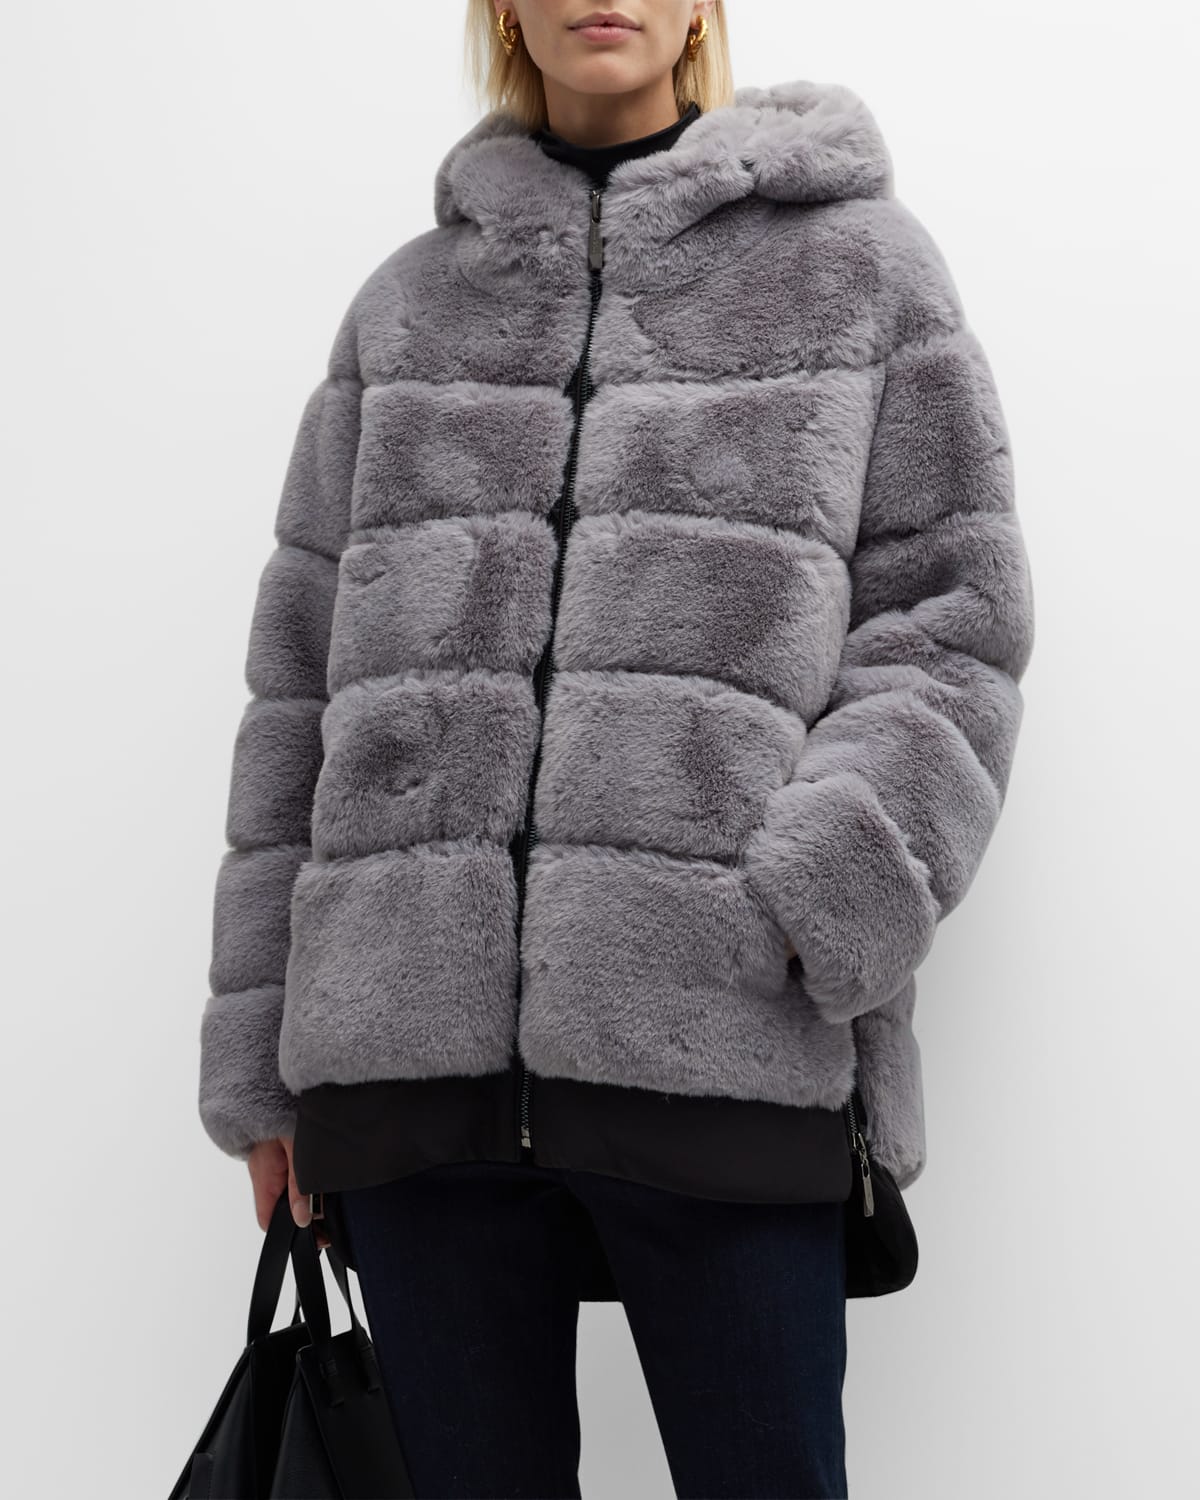 Belle Fare Fur Outerwear | Neiman Marcus